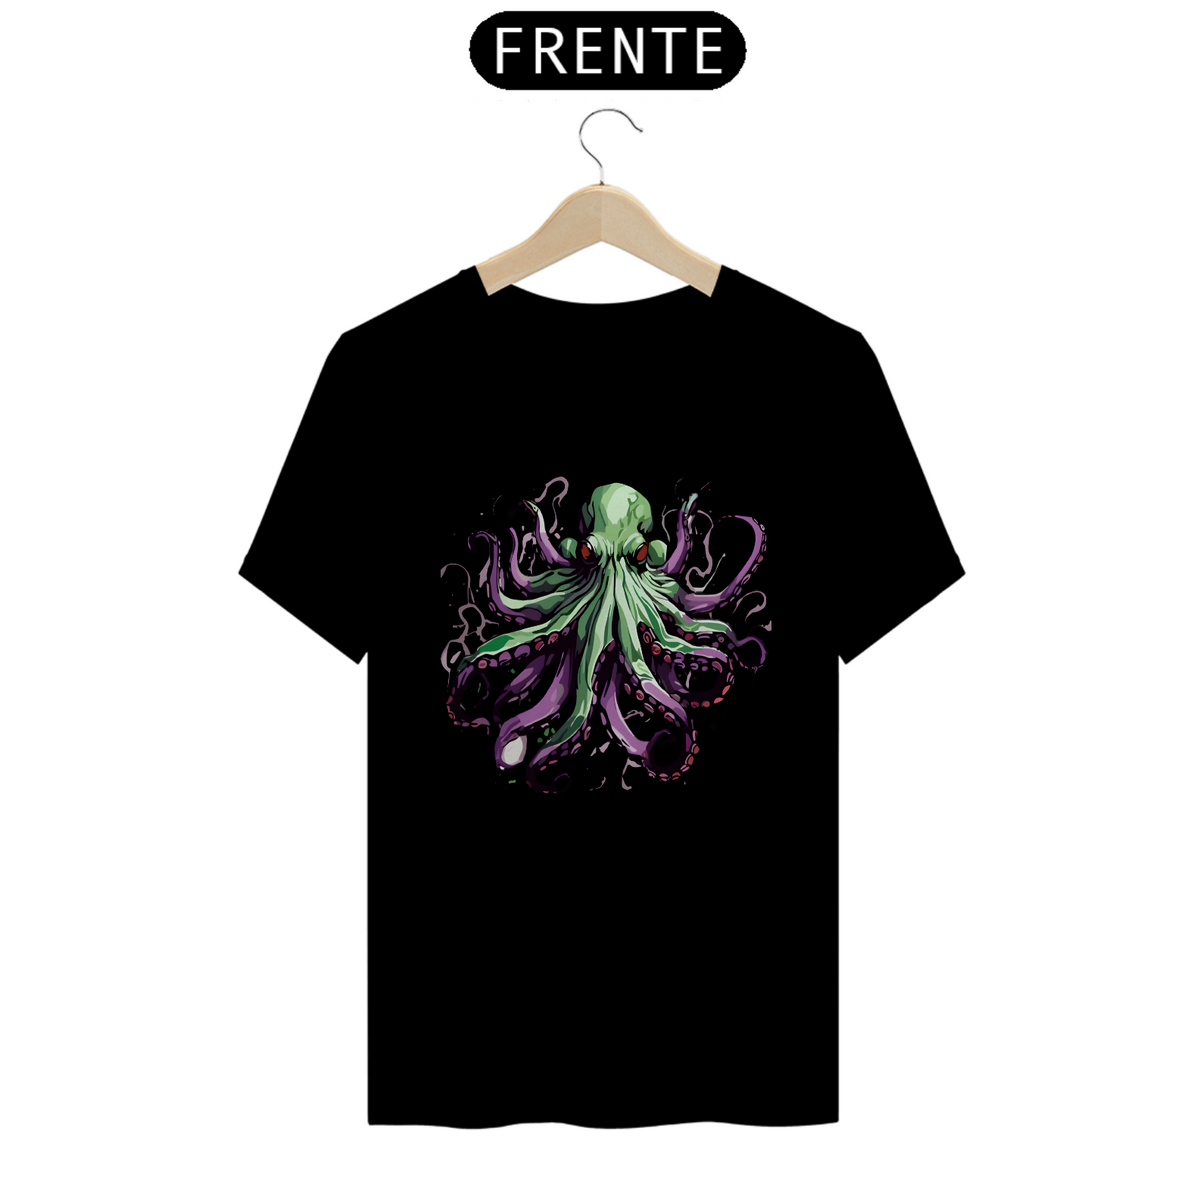 Nome do produto: Camiseta - Kraken